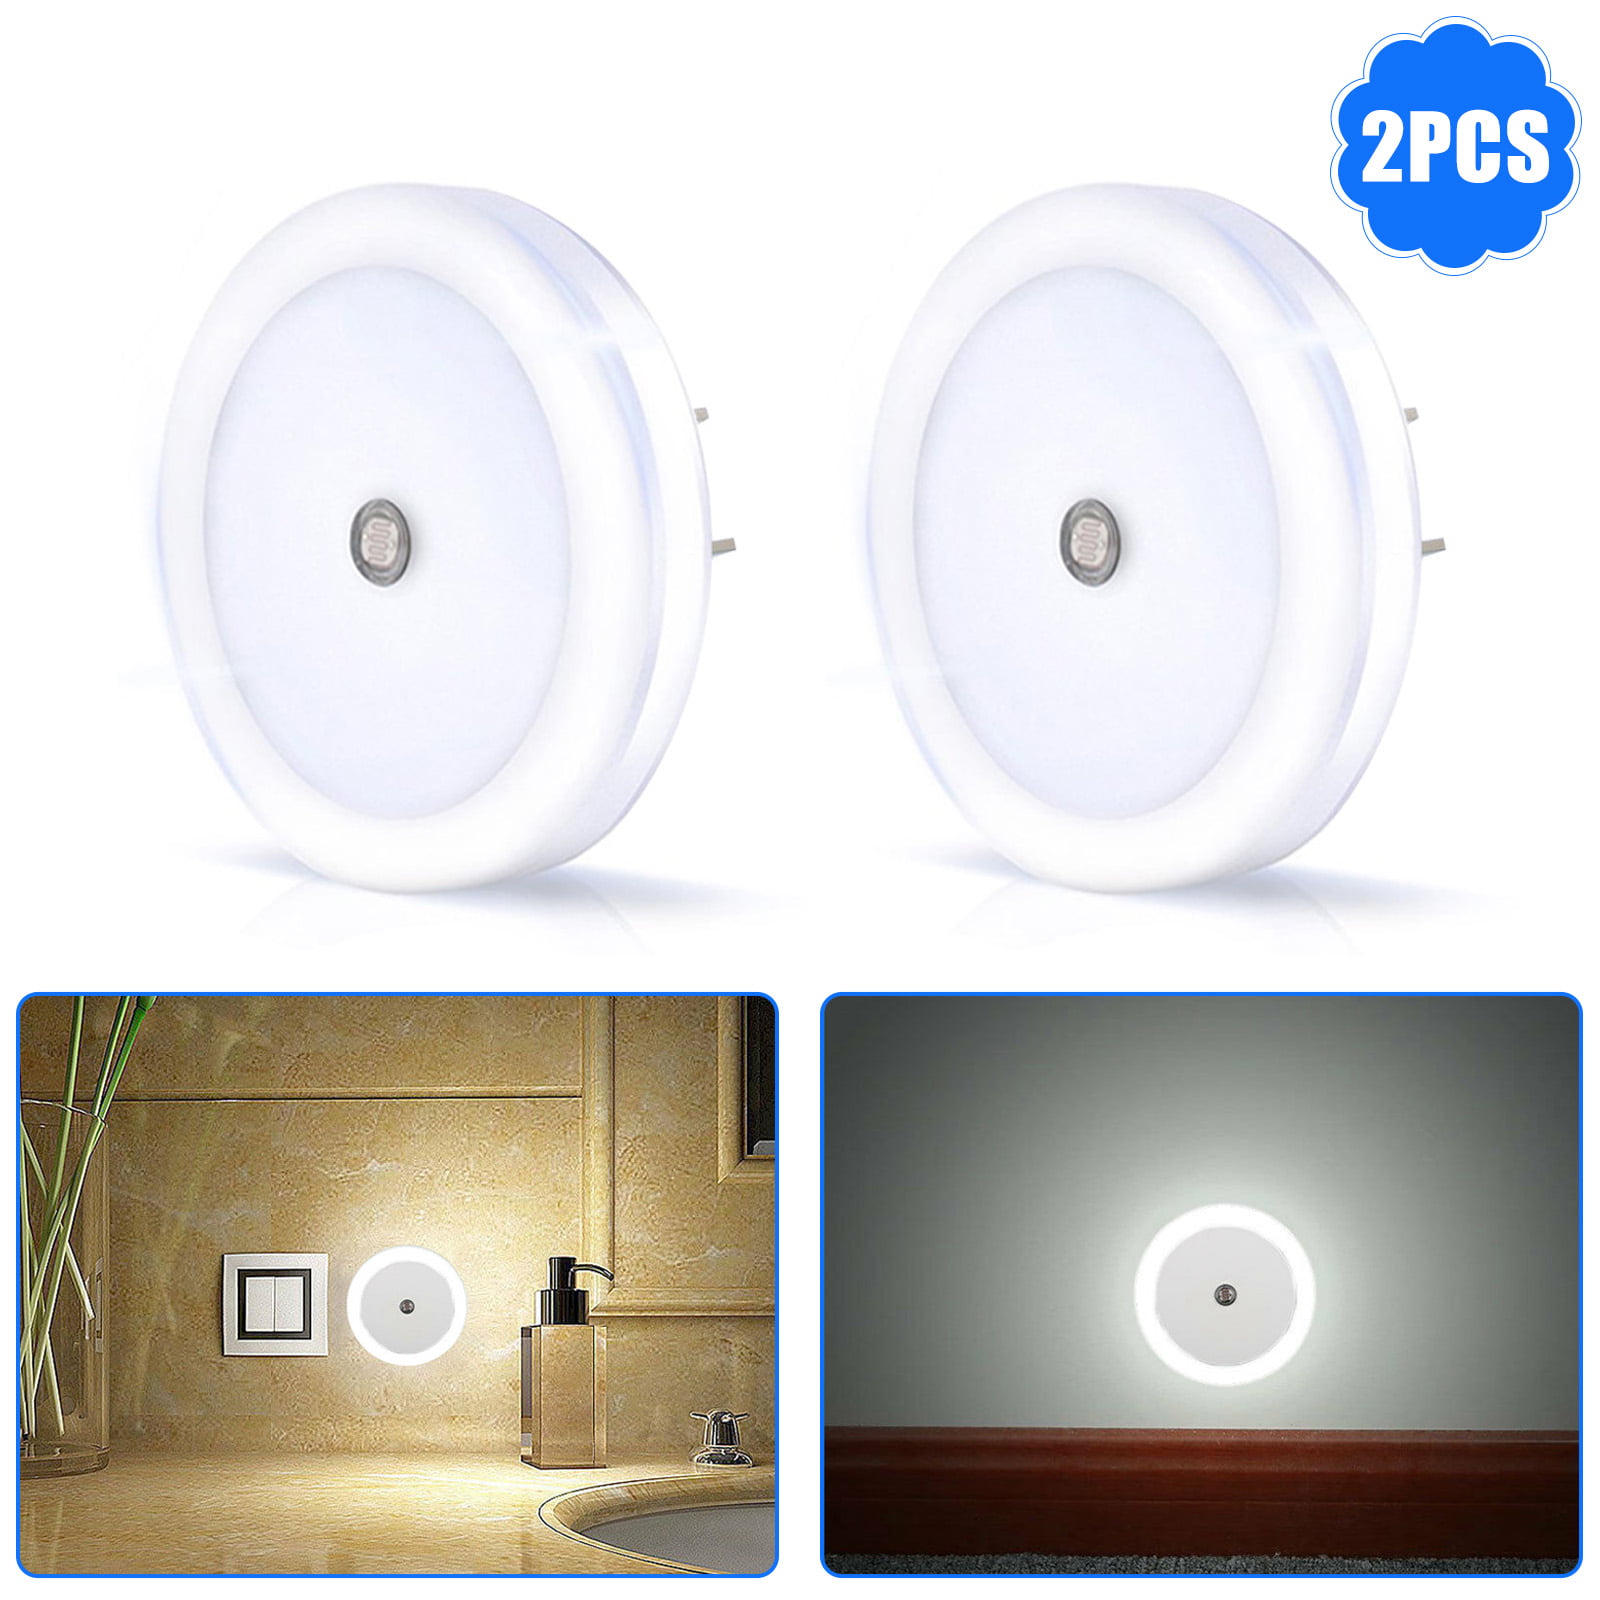 Cool White-2PCS/SET Motion Sensor Night Light-Plug in Wall Light-SOAIY 2PCS PIR Motion Sensor Lights Auto Lamp for Kids,Bedroom,Hallway